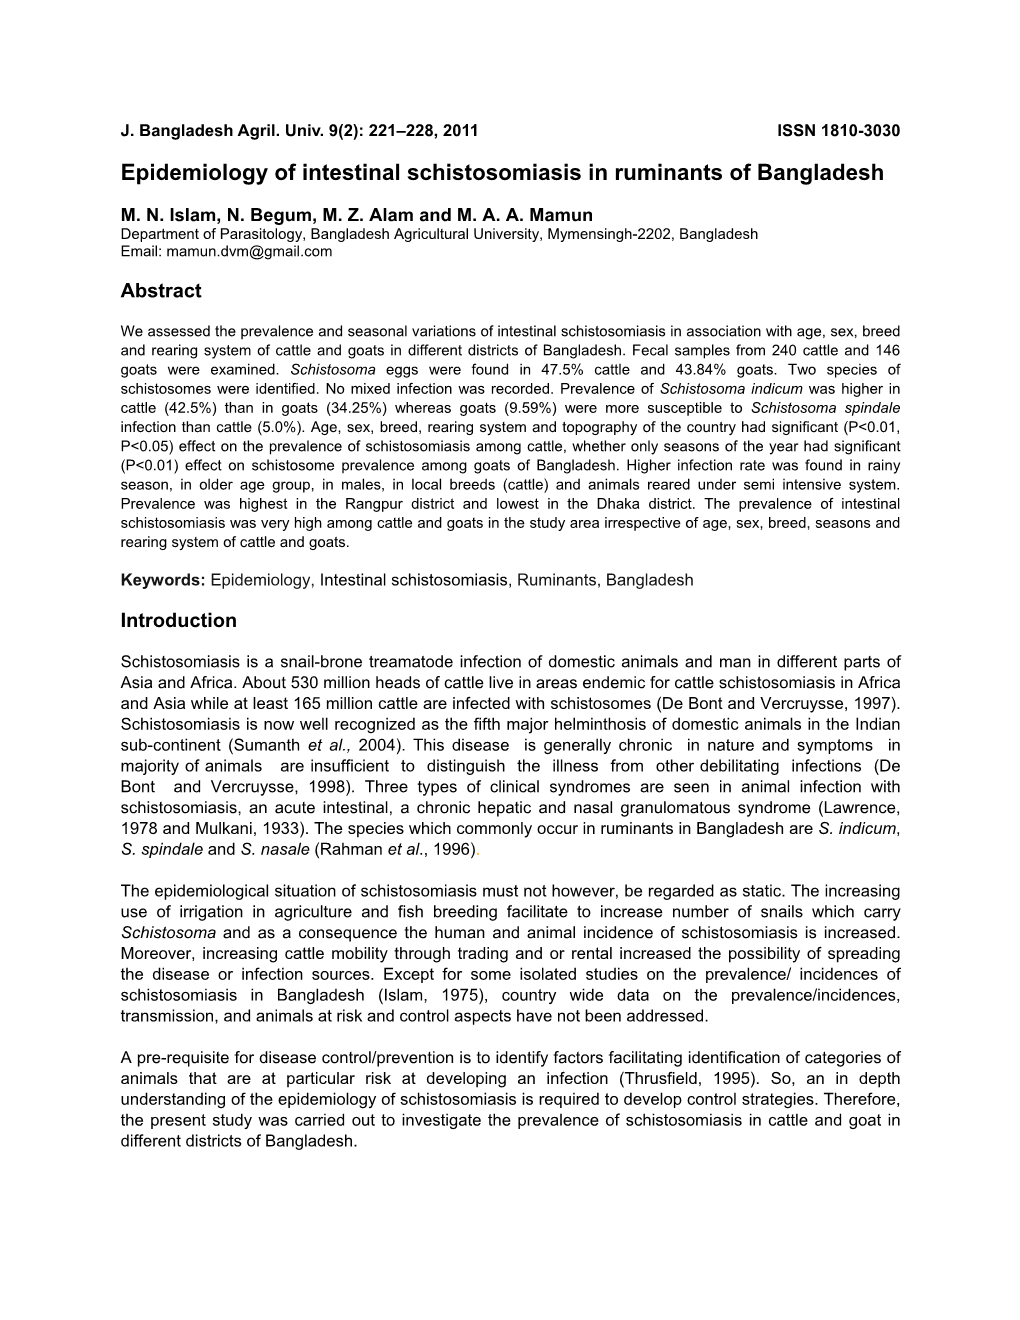 Epidemiology of Intestinal Schistosomiasis in Ruminants of Bangladesh